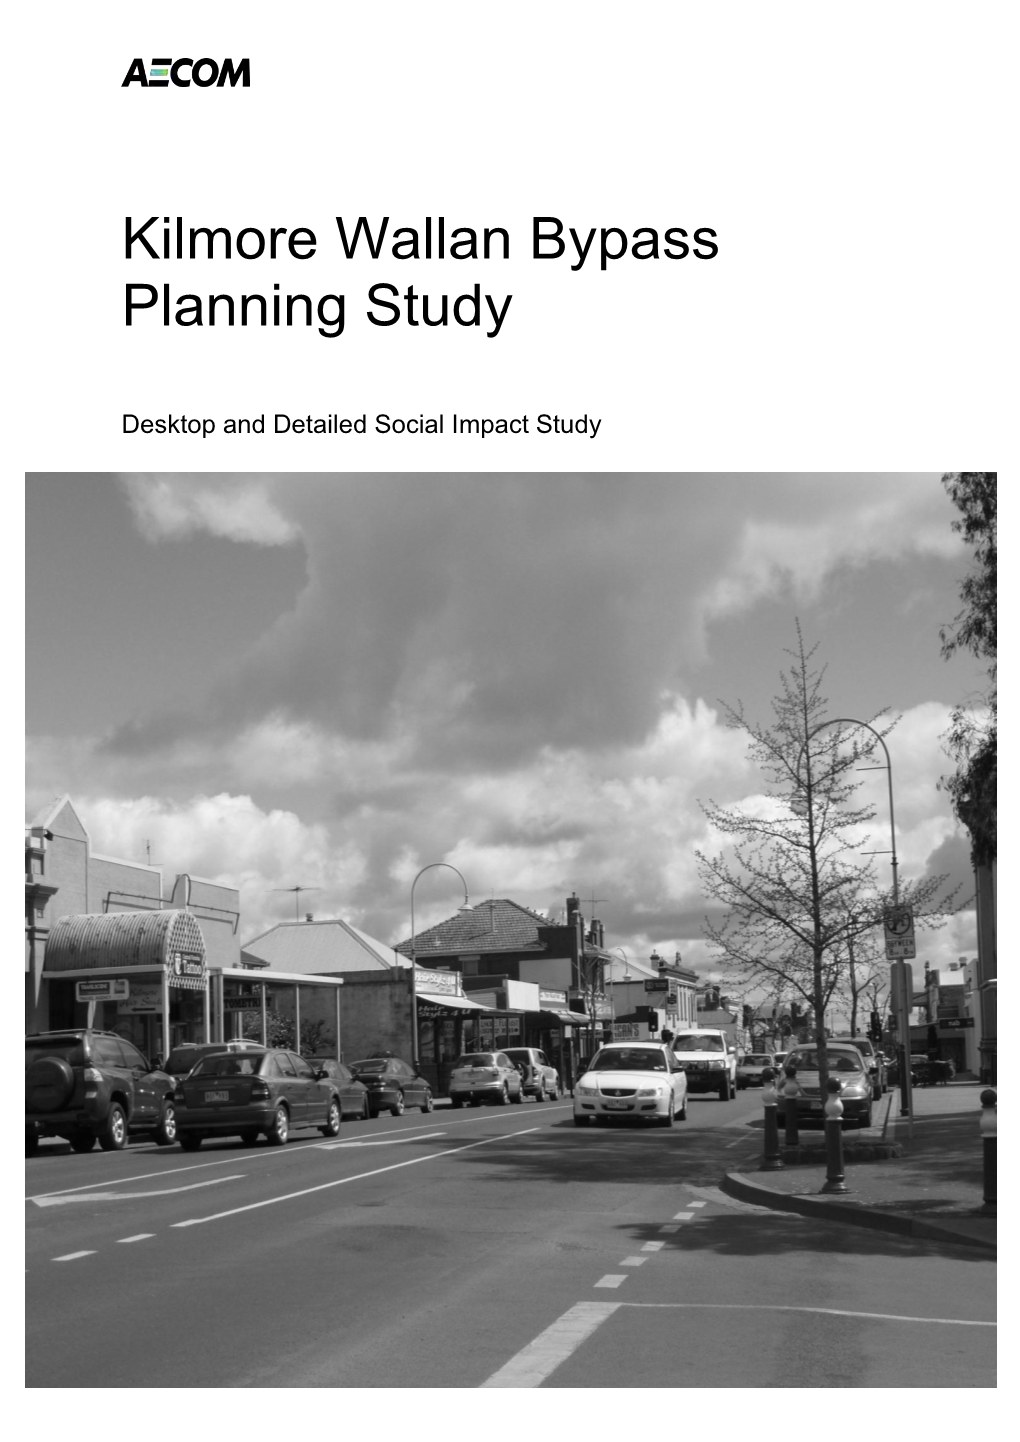 Kilmore Wallan Bypass Planning Study